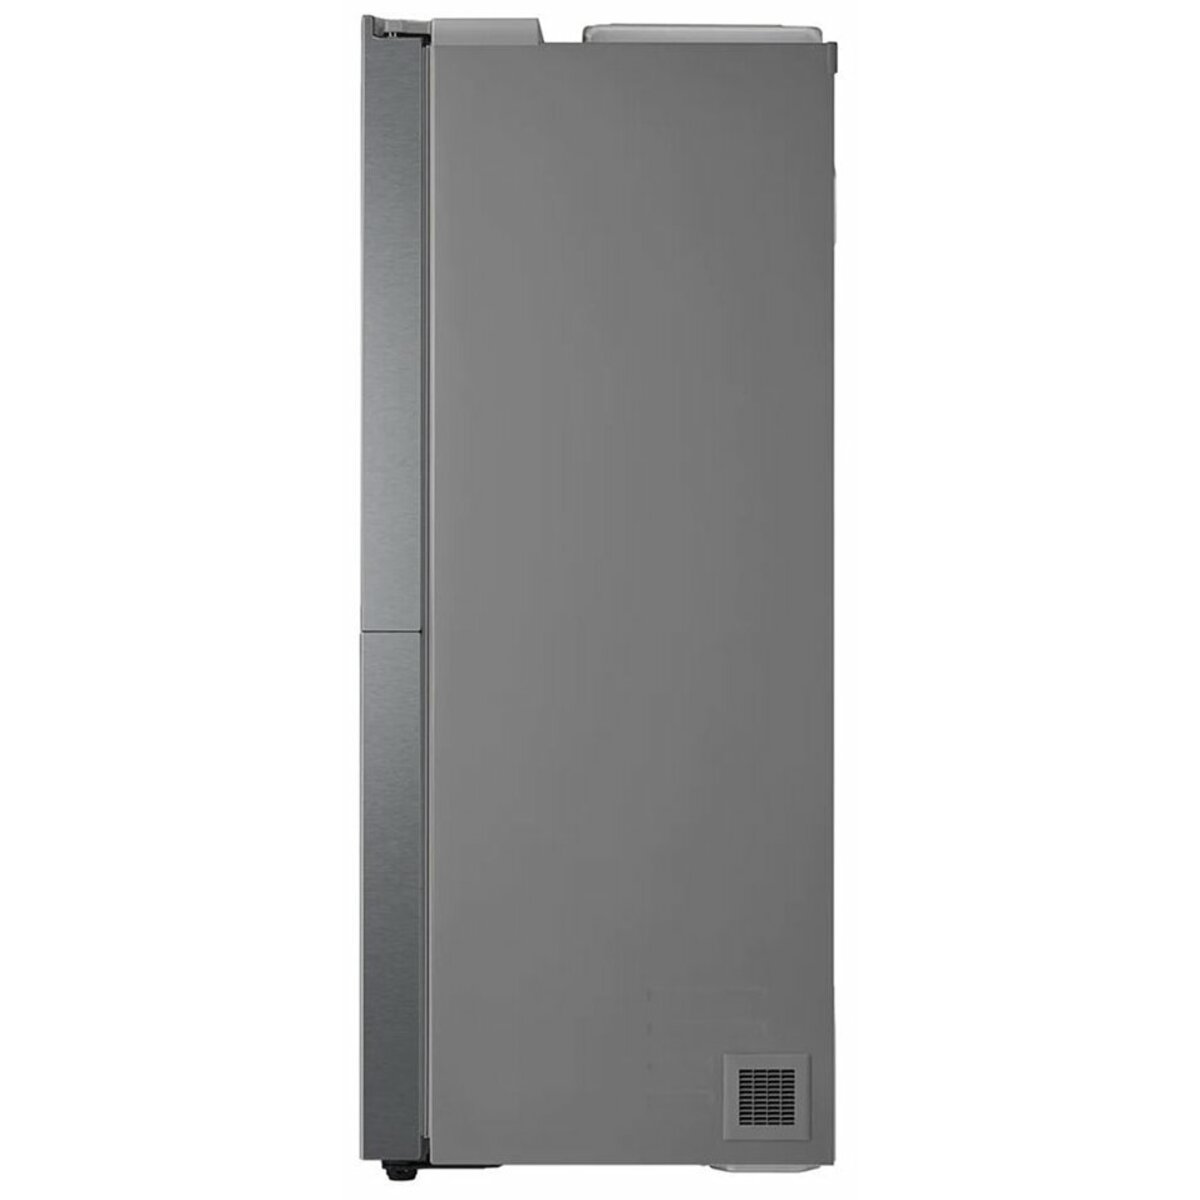 Холодильник LG GC-B257JLYV (Цвет: Graphite)